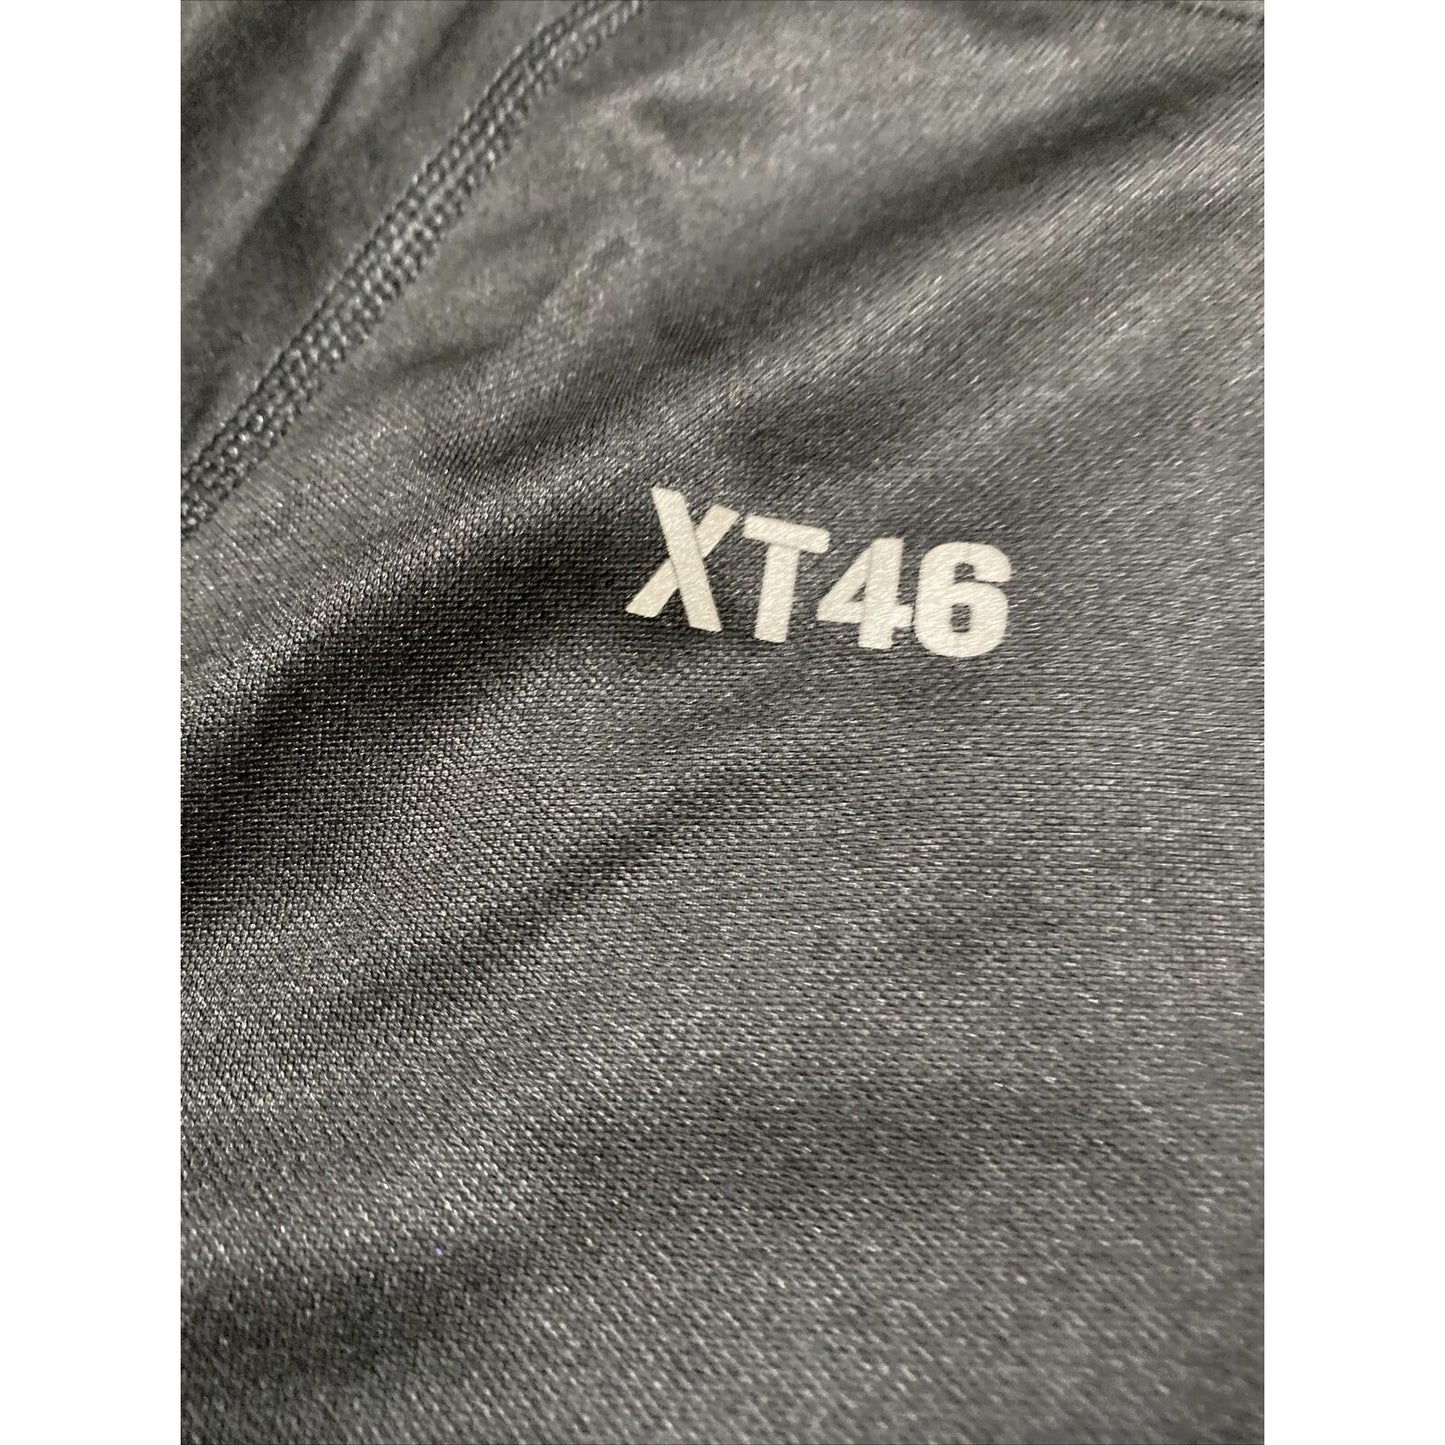 Soffe Extreme Training XT46 Men’s Medium Black & Camo Military Polyester T-shirt